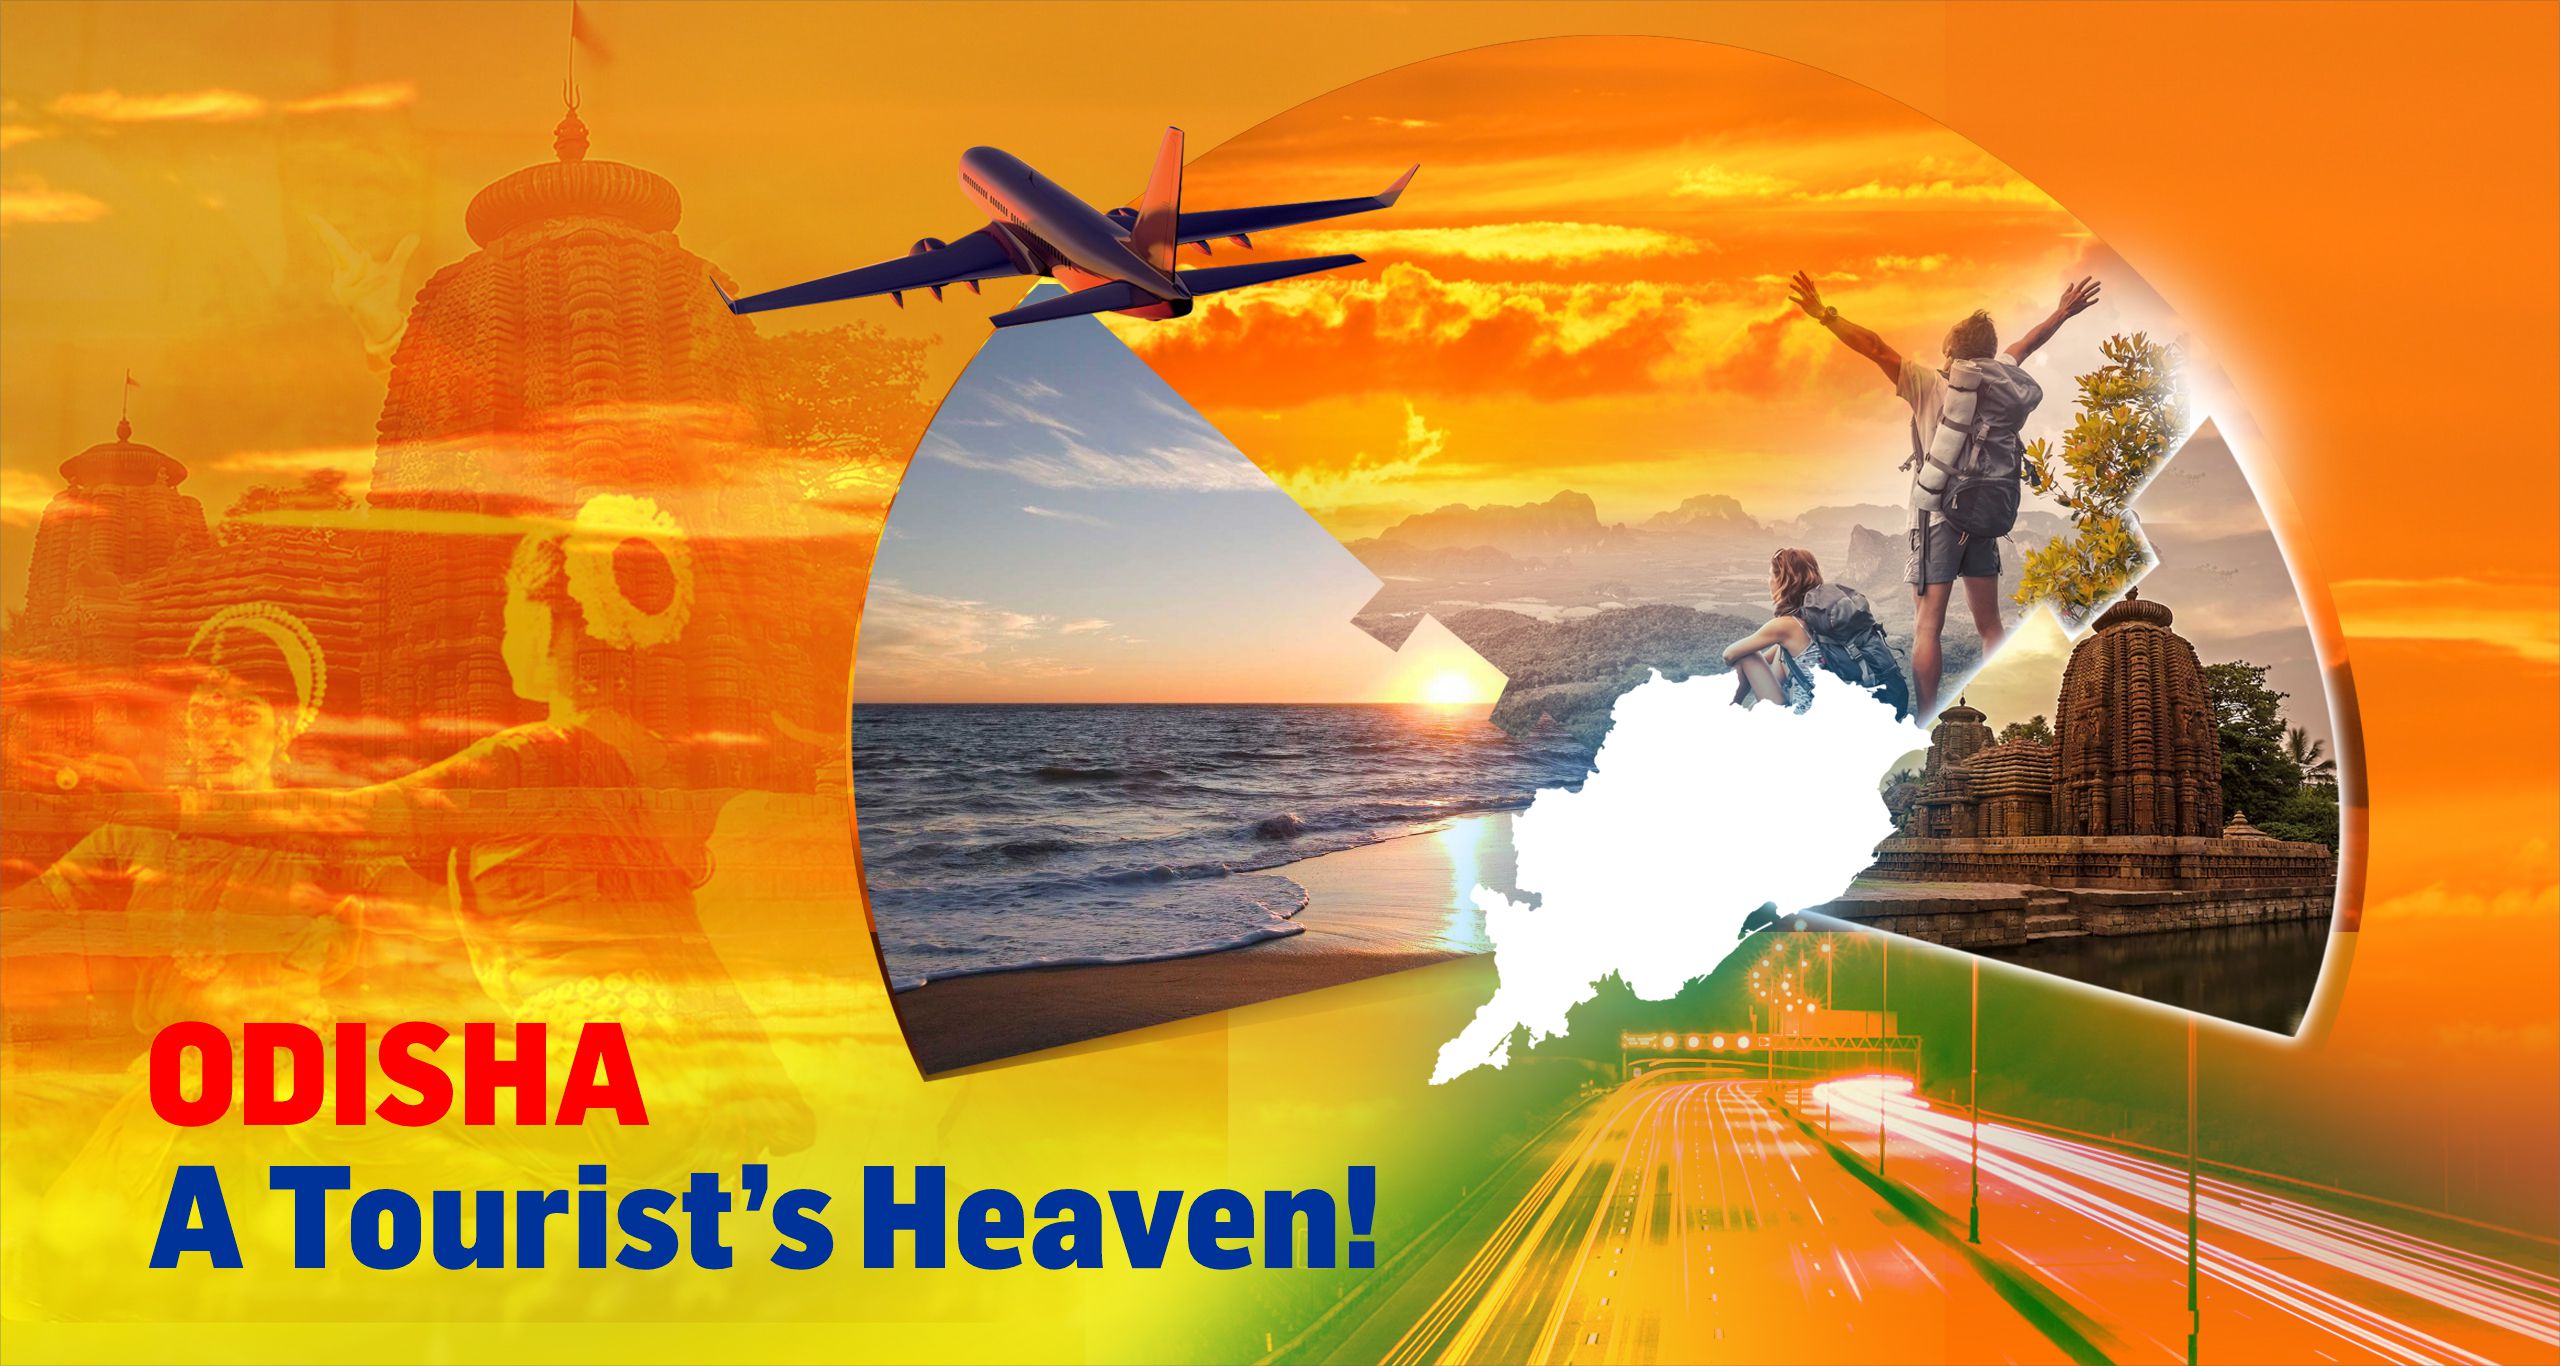 Odisha: A Tourist’s Heaven!